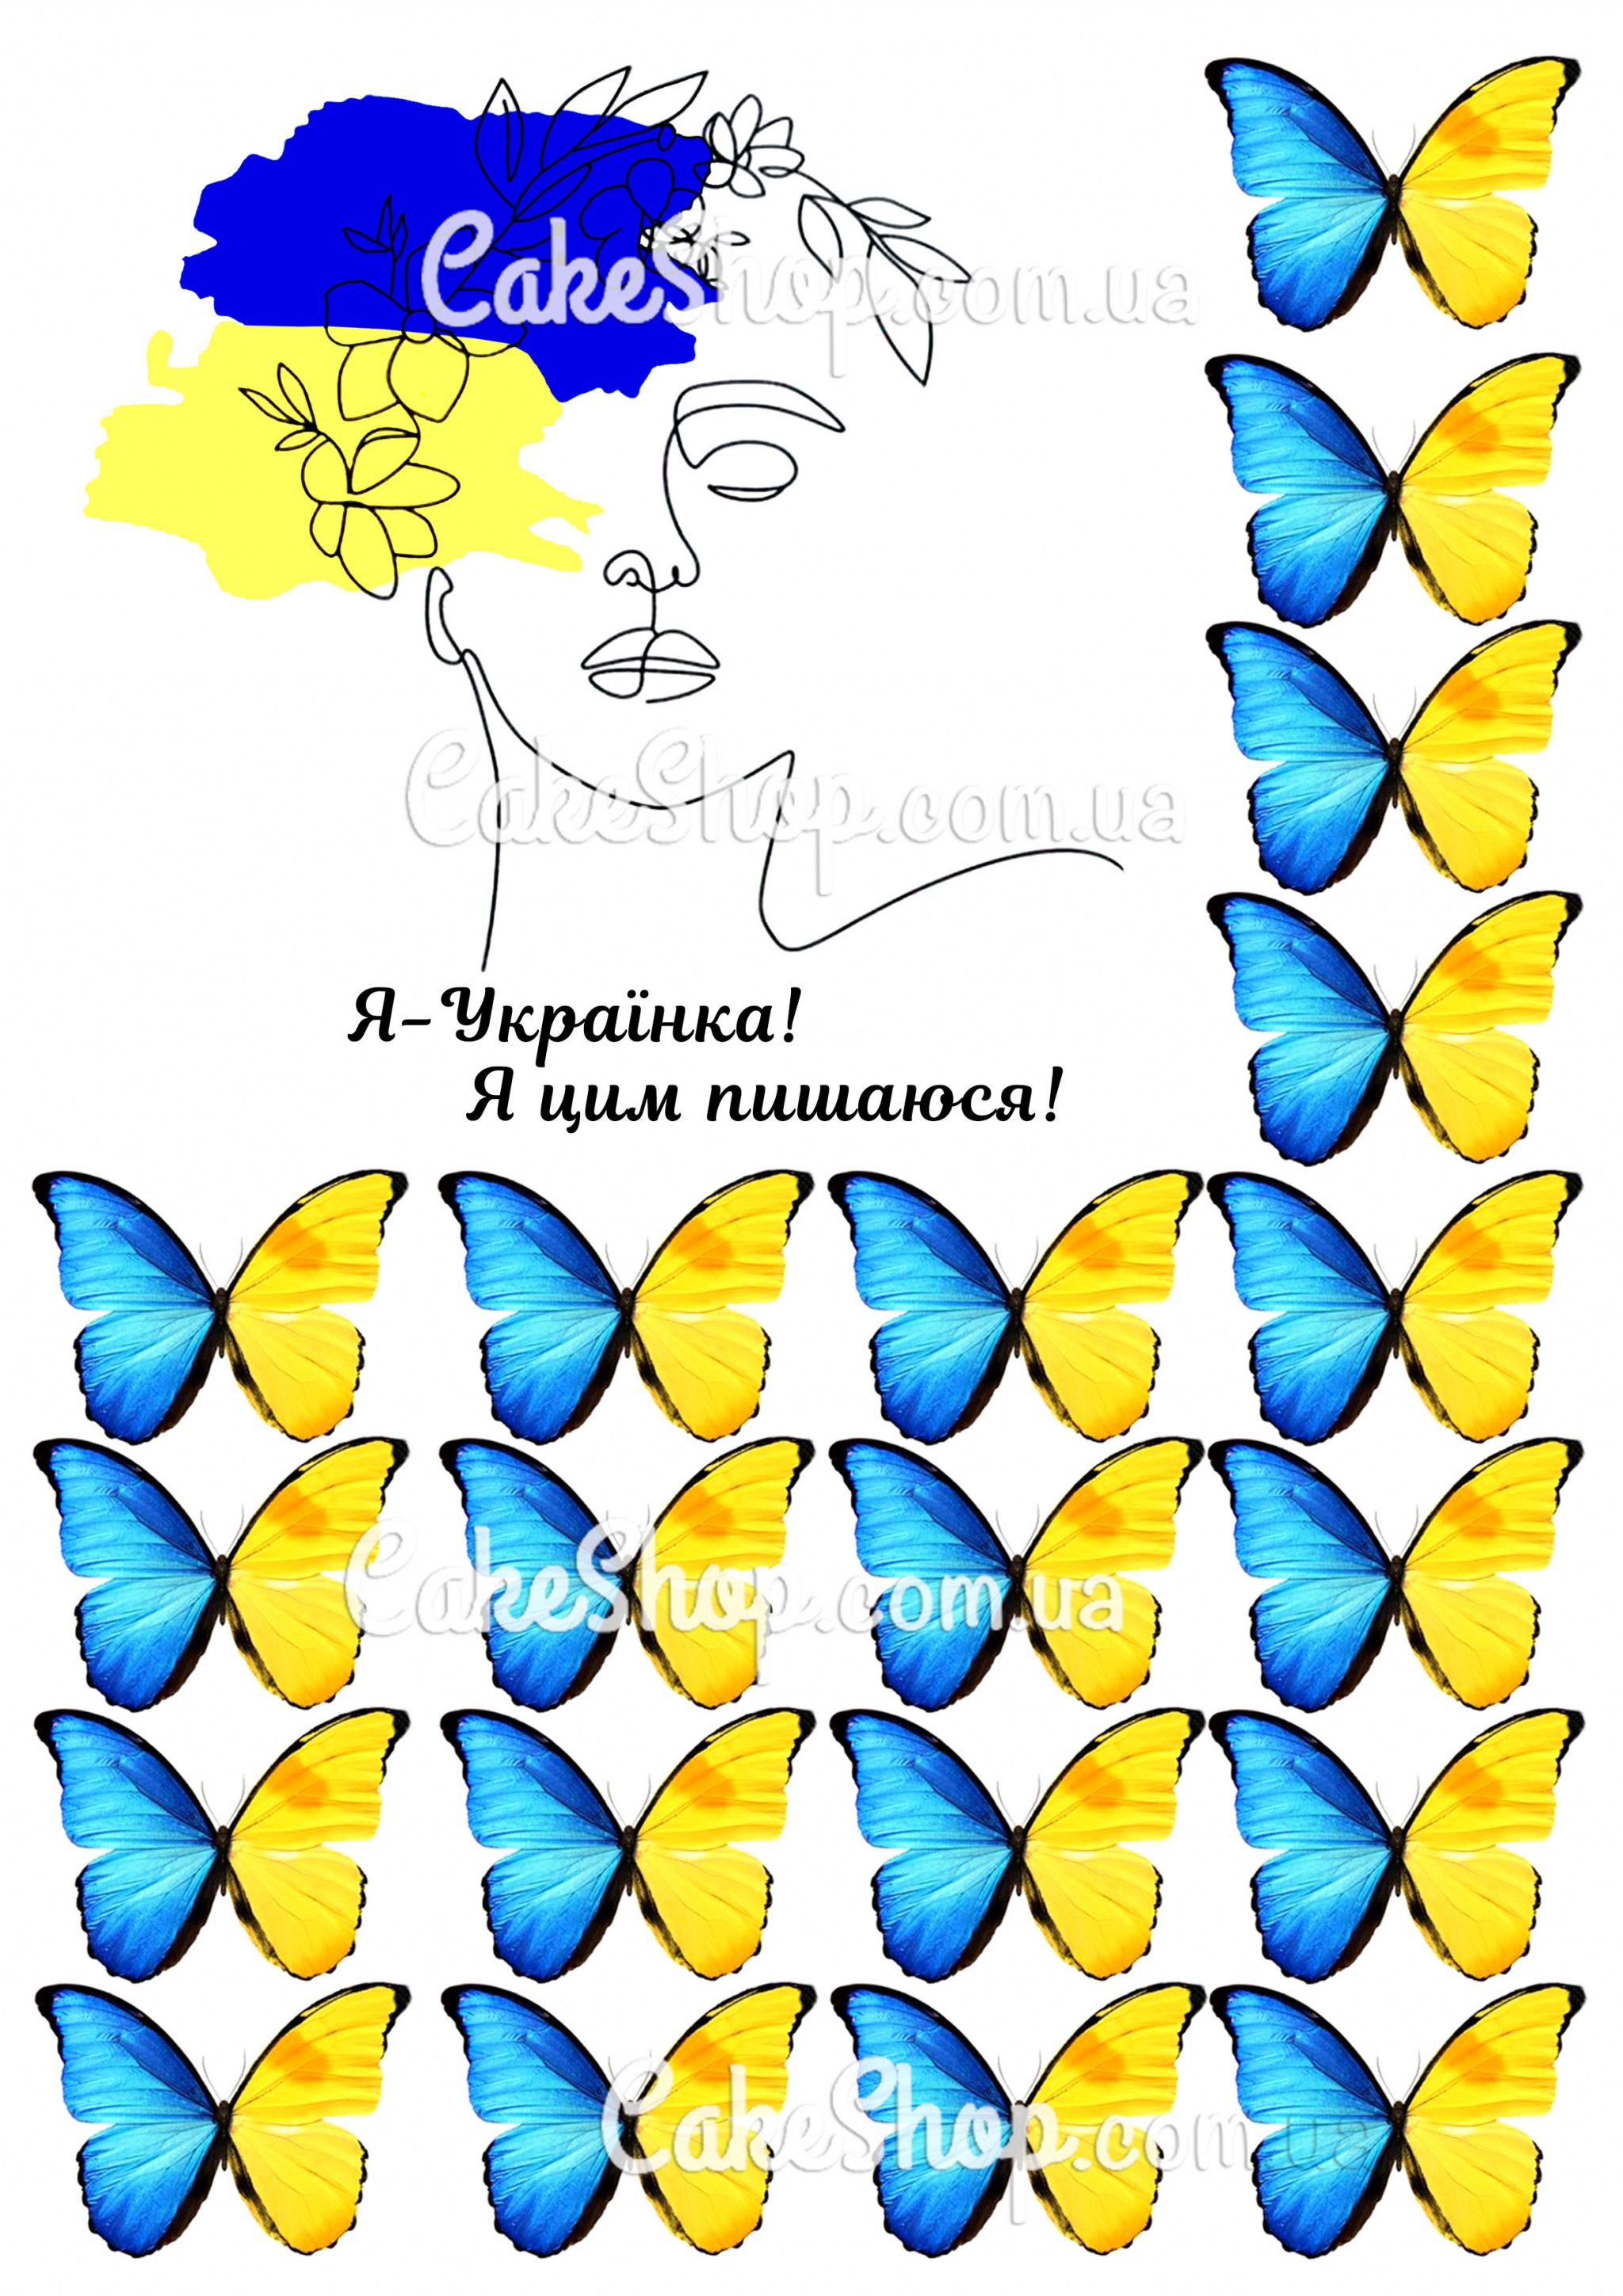 ⋗ Вафельна картинка Я-Українка! купити в Україні ➛ CakeShop.com.ua, фото